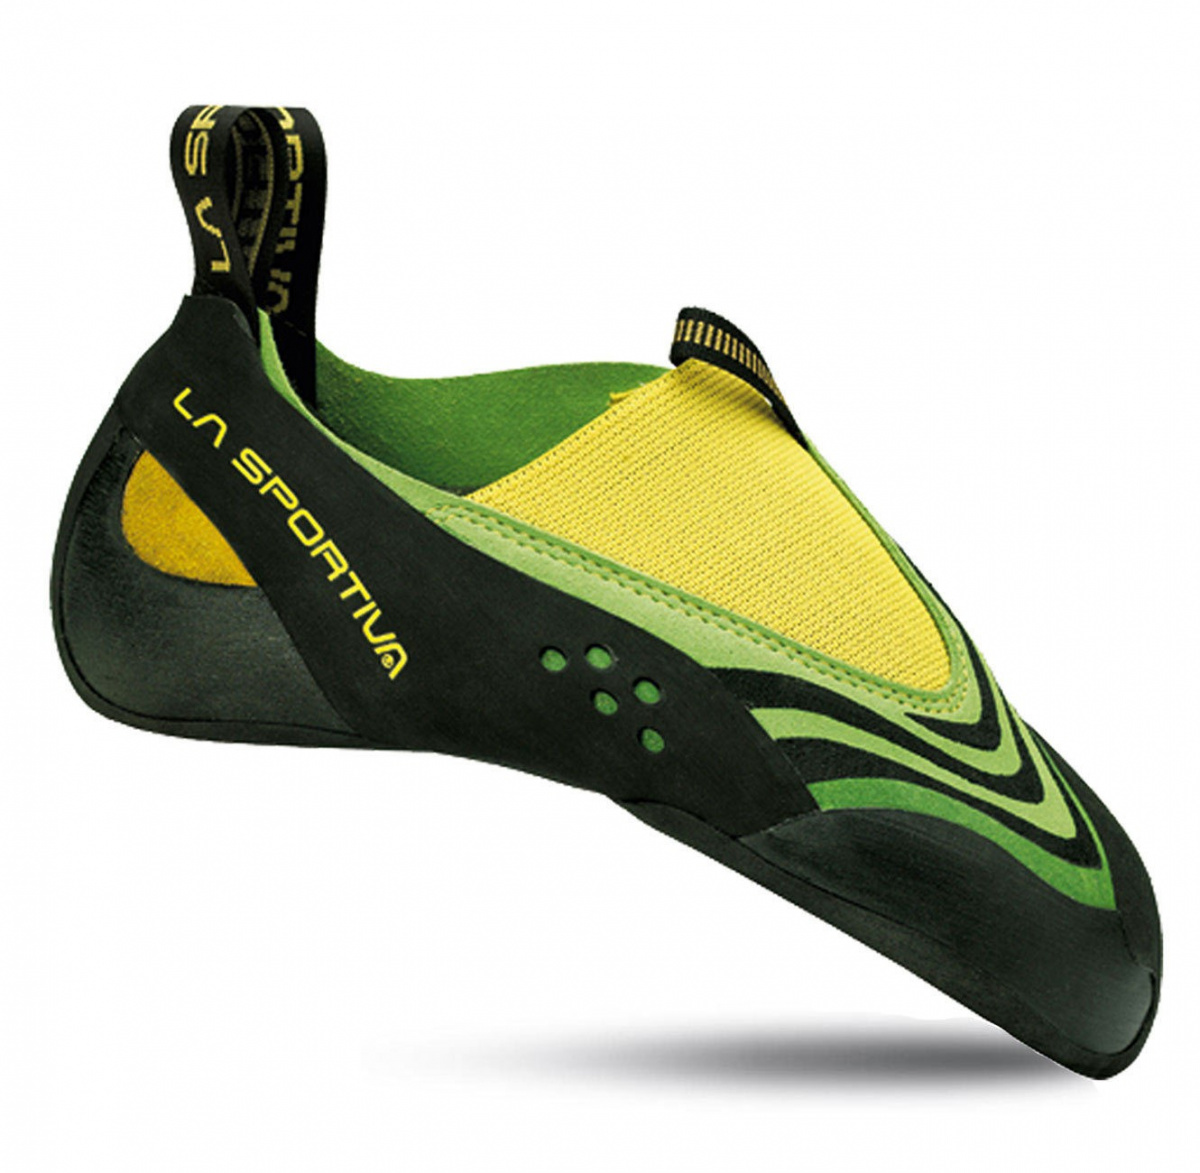 Lezečky La Sportiva Speedster green/yellow 37,5 EU